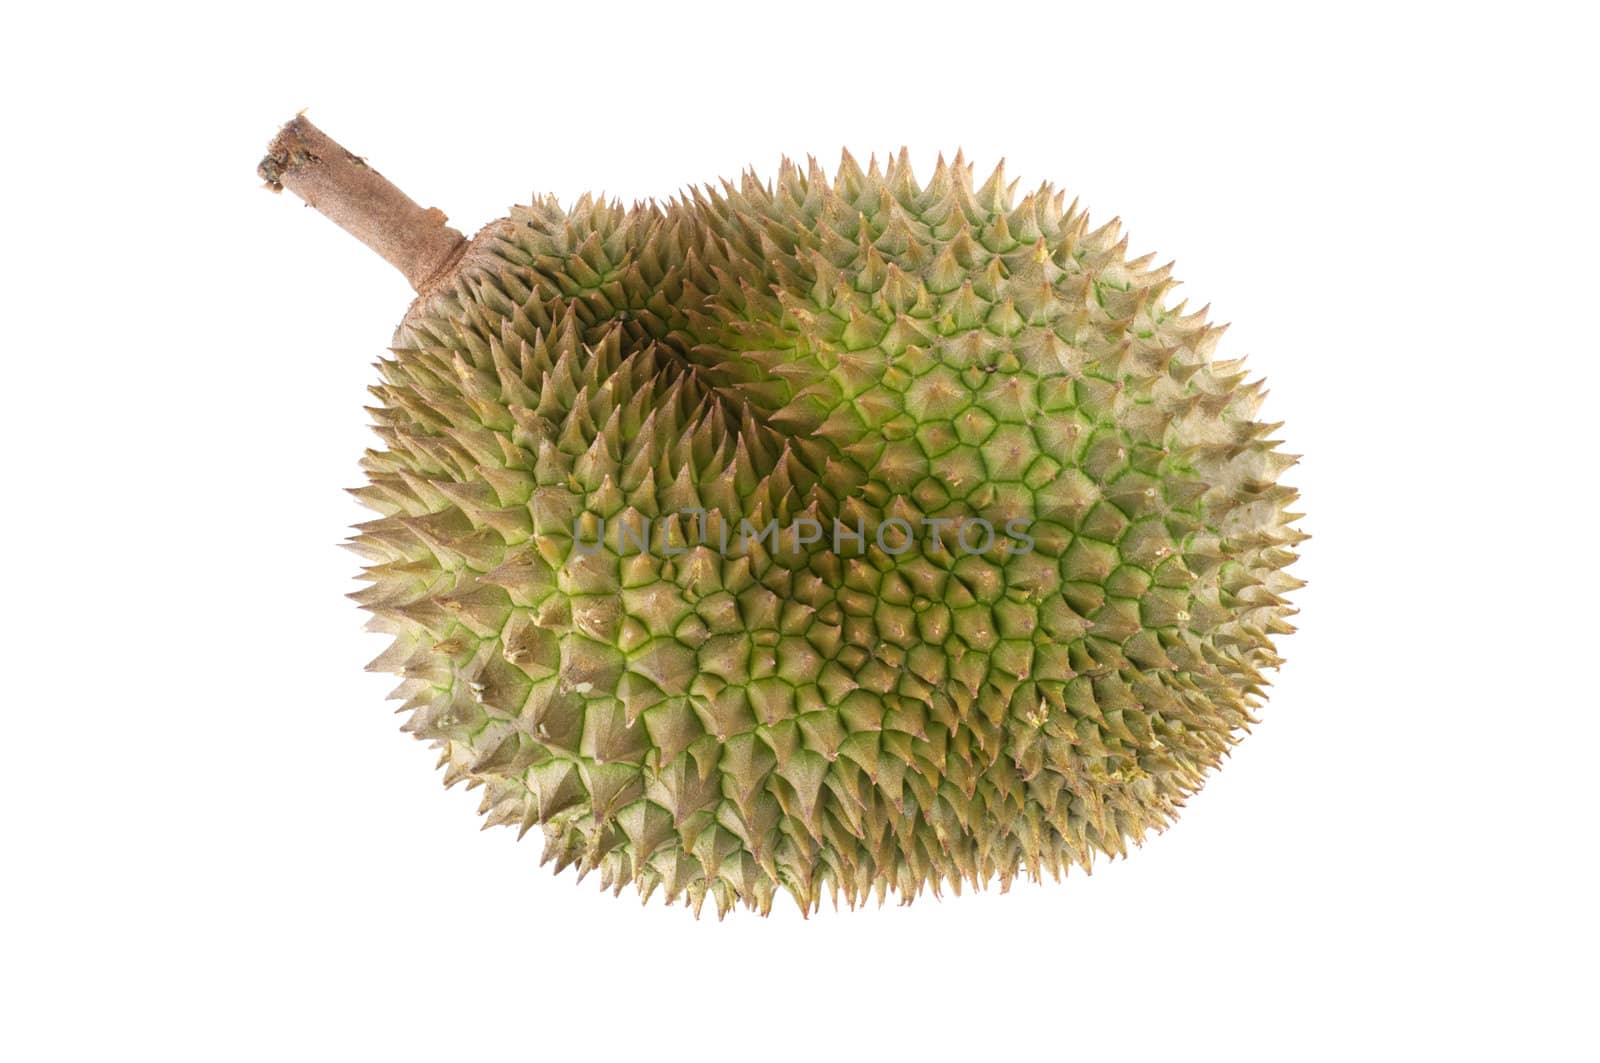 Tropical fruit - Durian by szefei